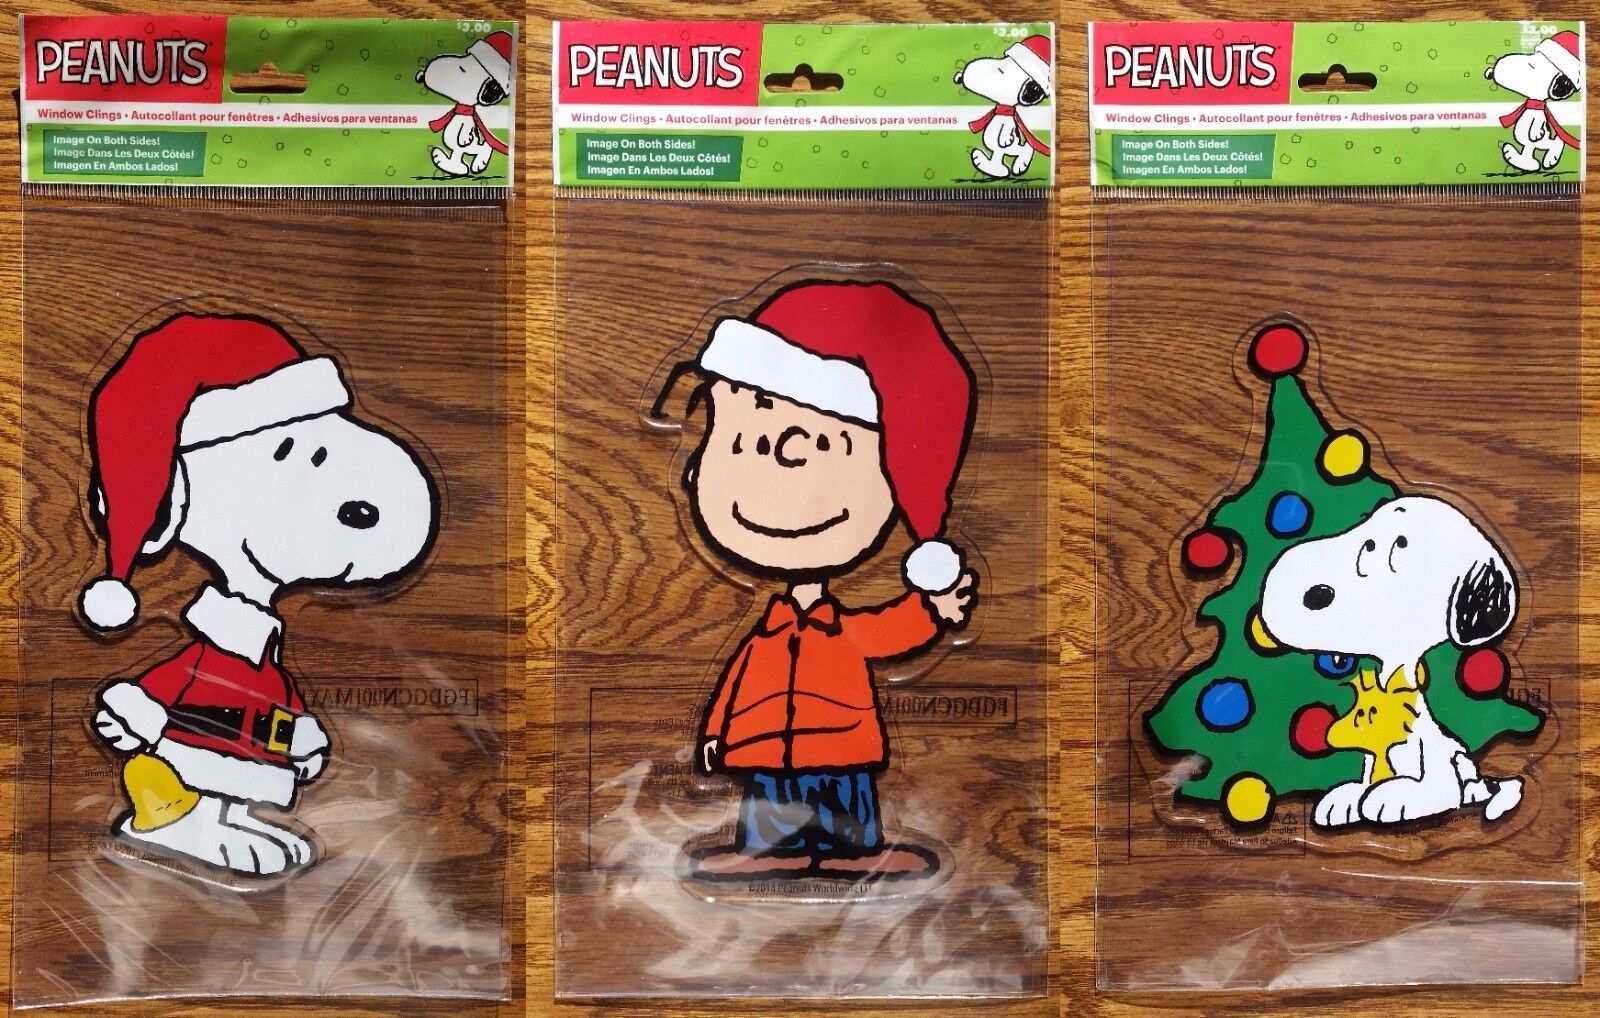 Charlie Brown Denver Mall Snoopy Santa Peanuts REUSABLE Christmas Comics Columbus Mall Win